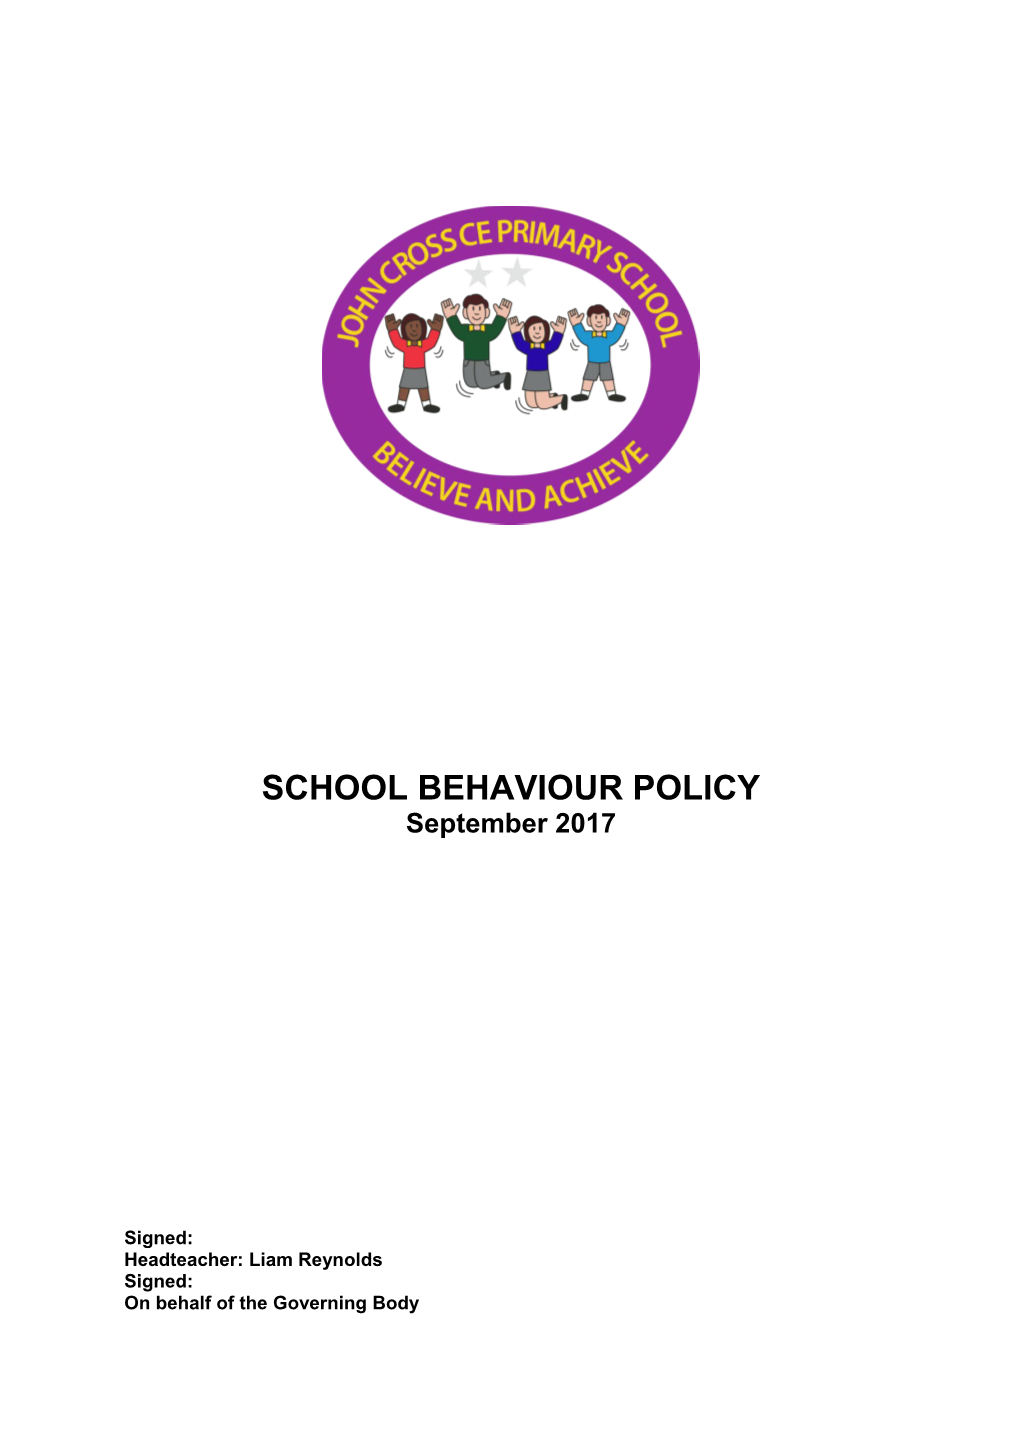 School Behaviour Policy